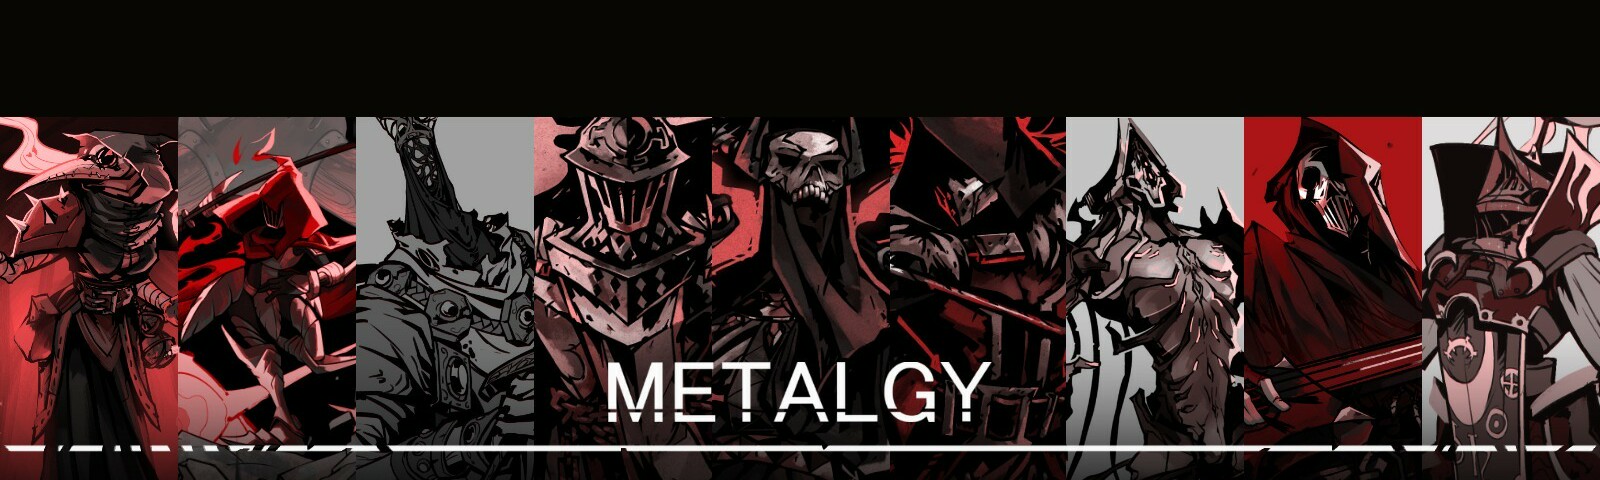 creator cover MetalGy